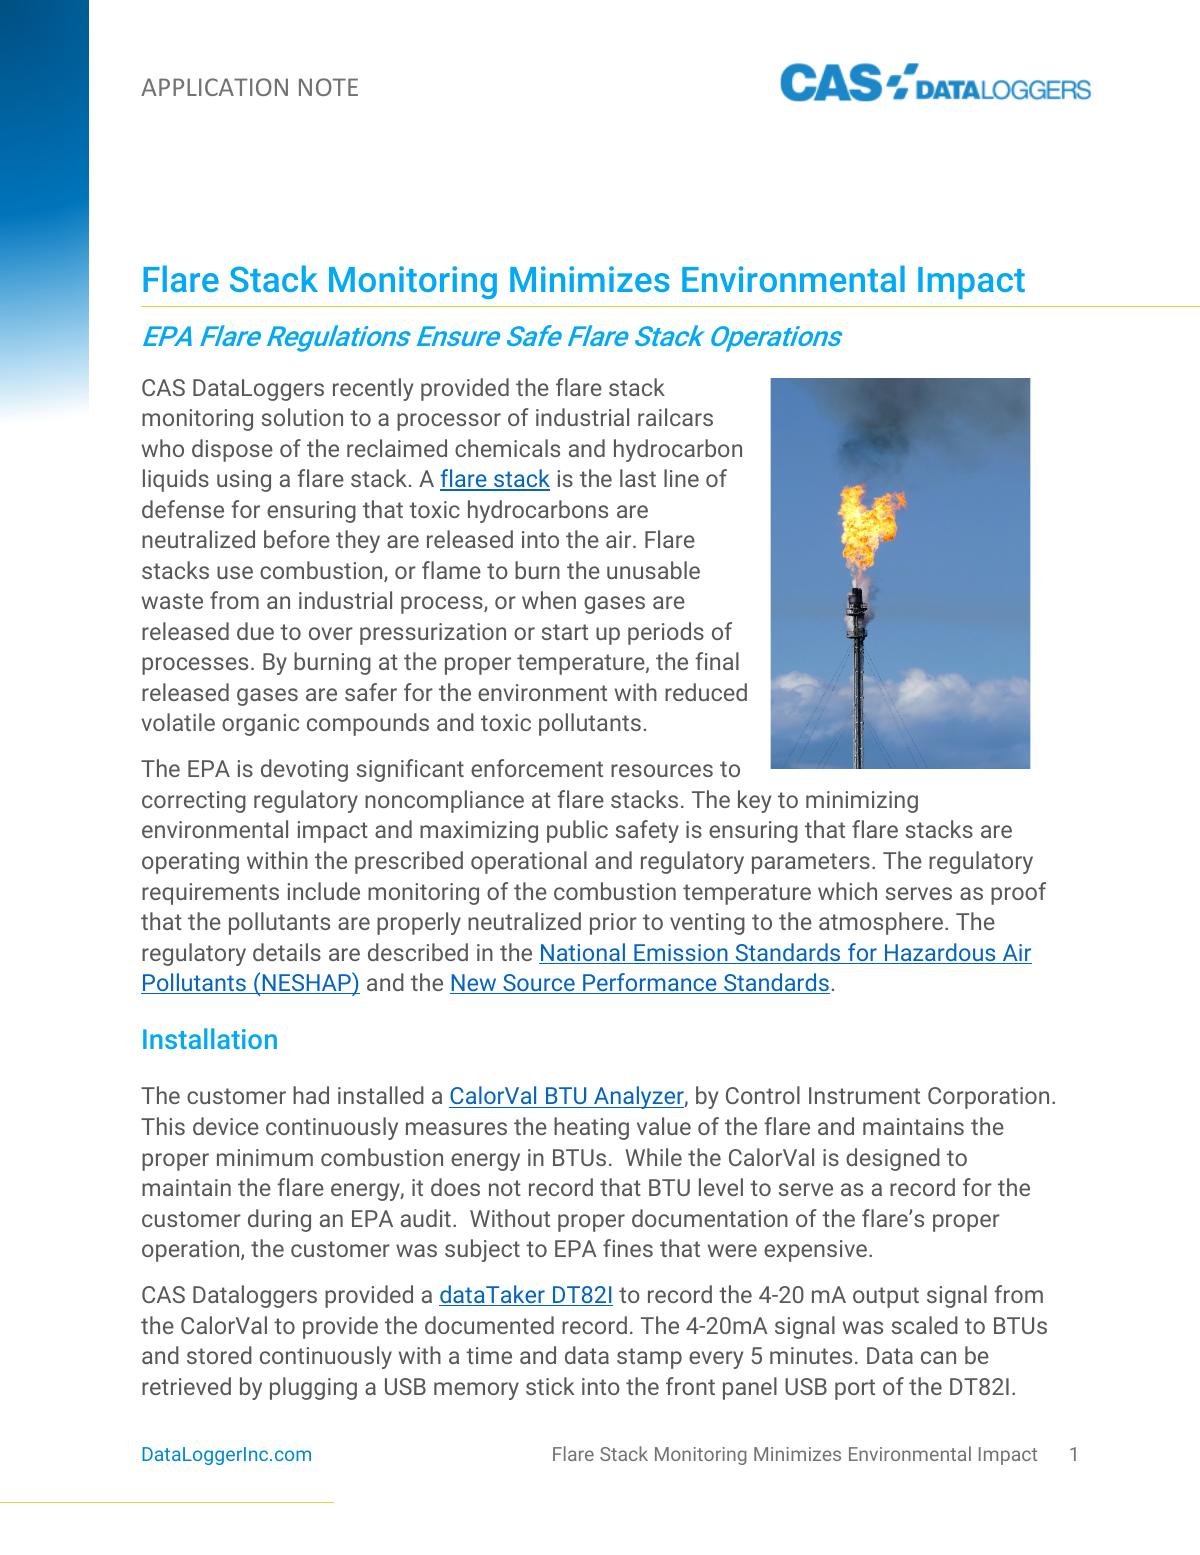 Flare Stack Monitoring Minimizes Environmental Impact